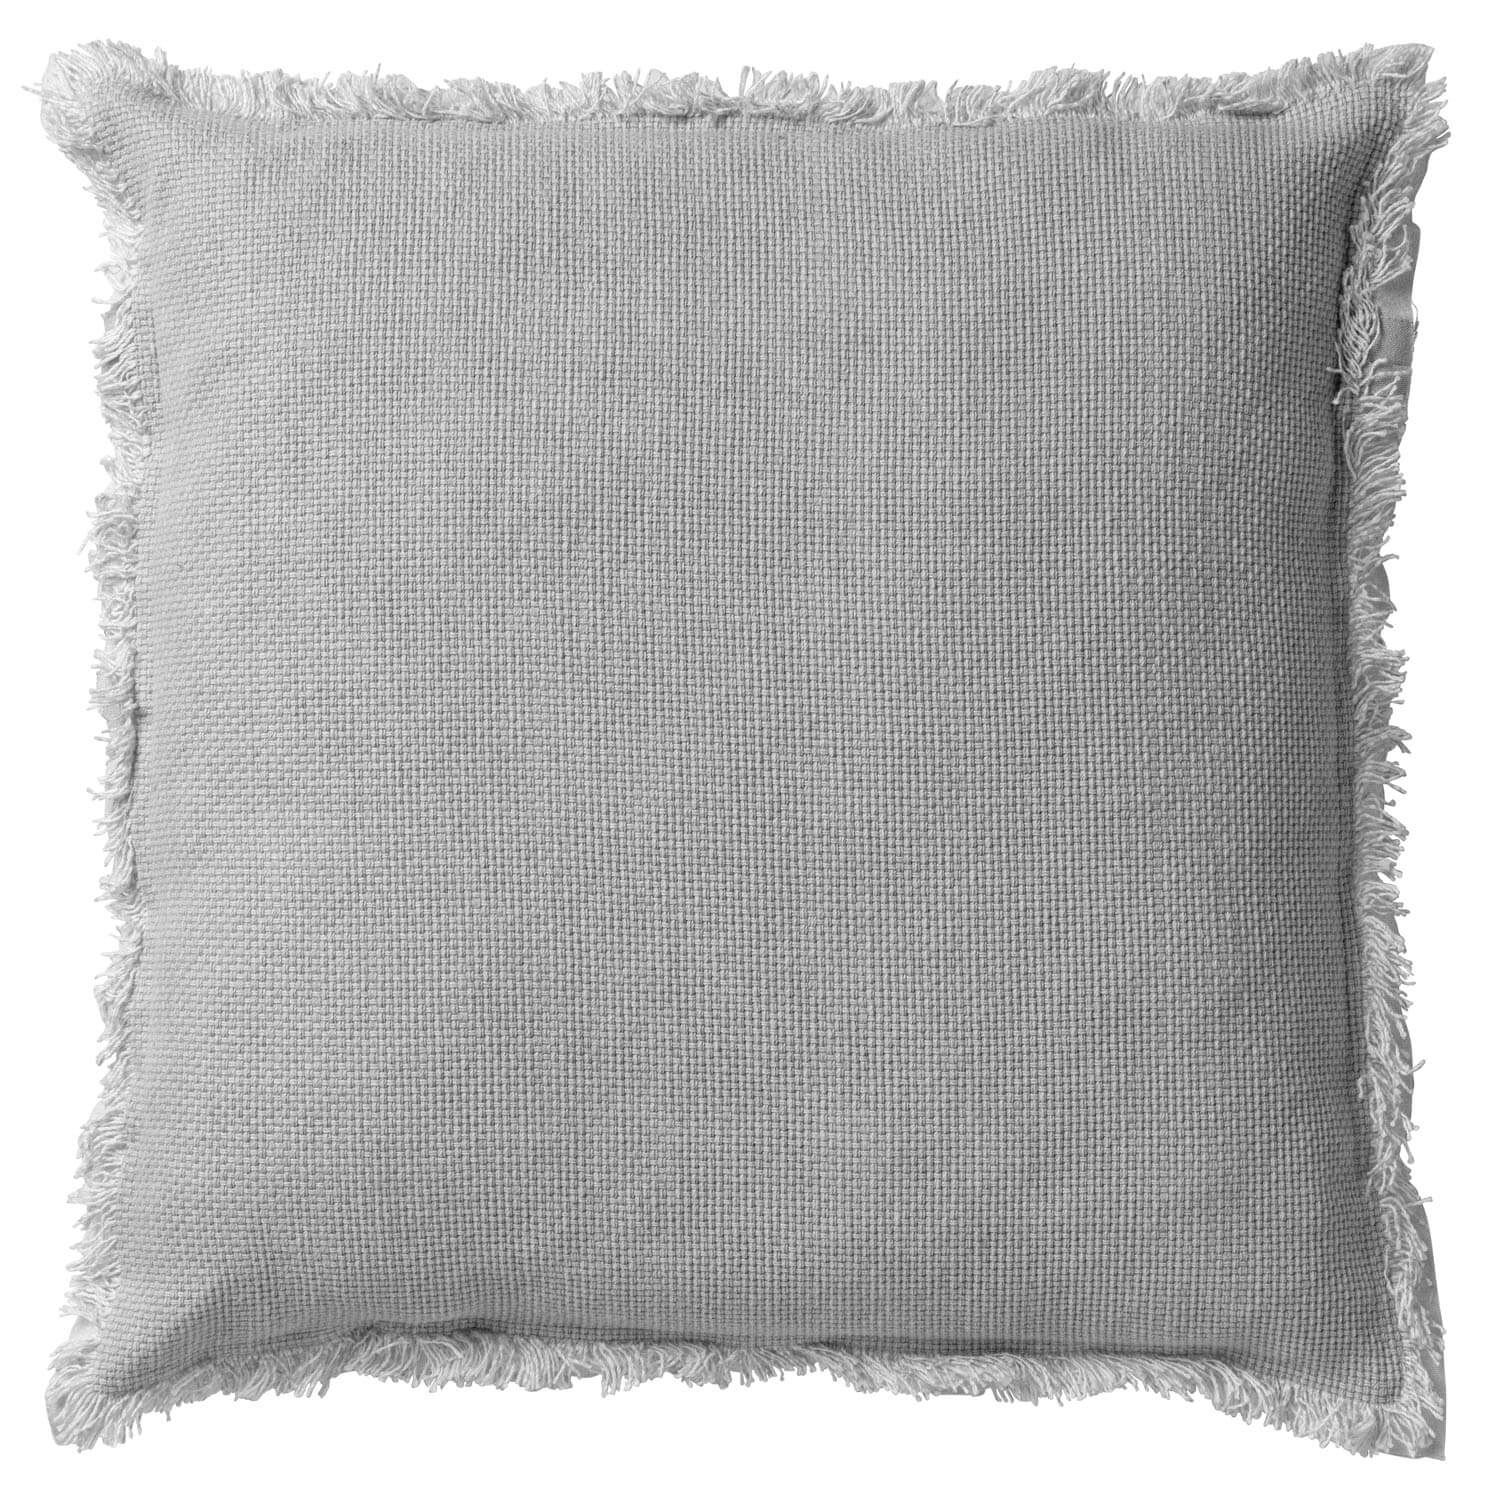 BURTO - Cushion 45x45 cm Micro Chip - grey